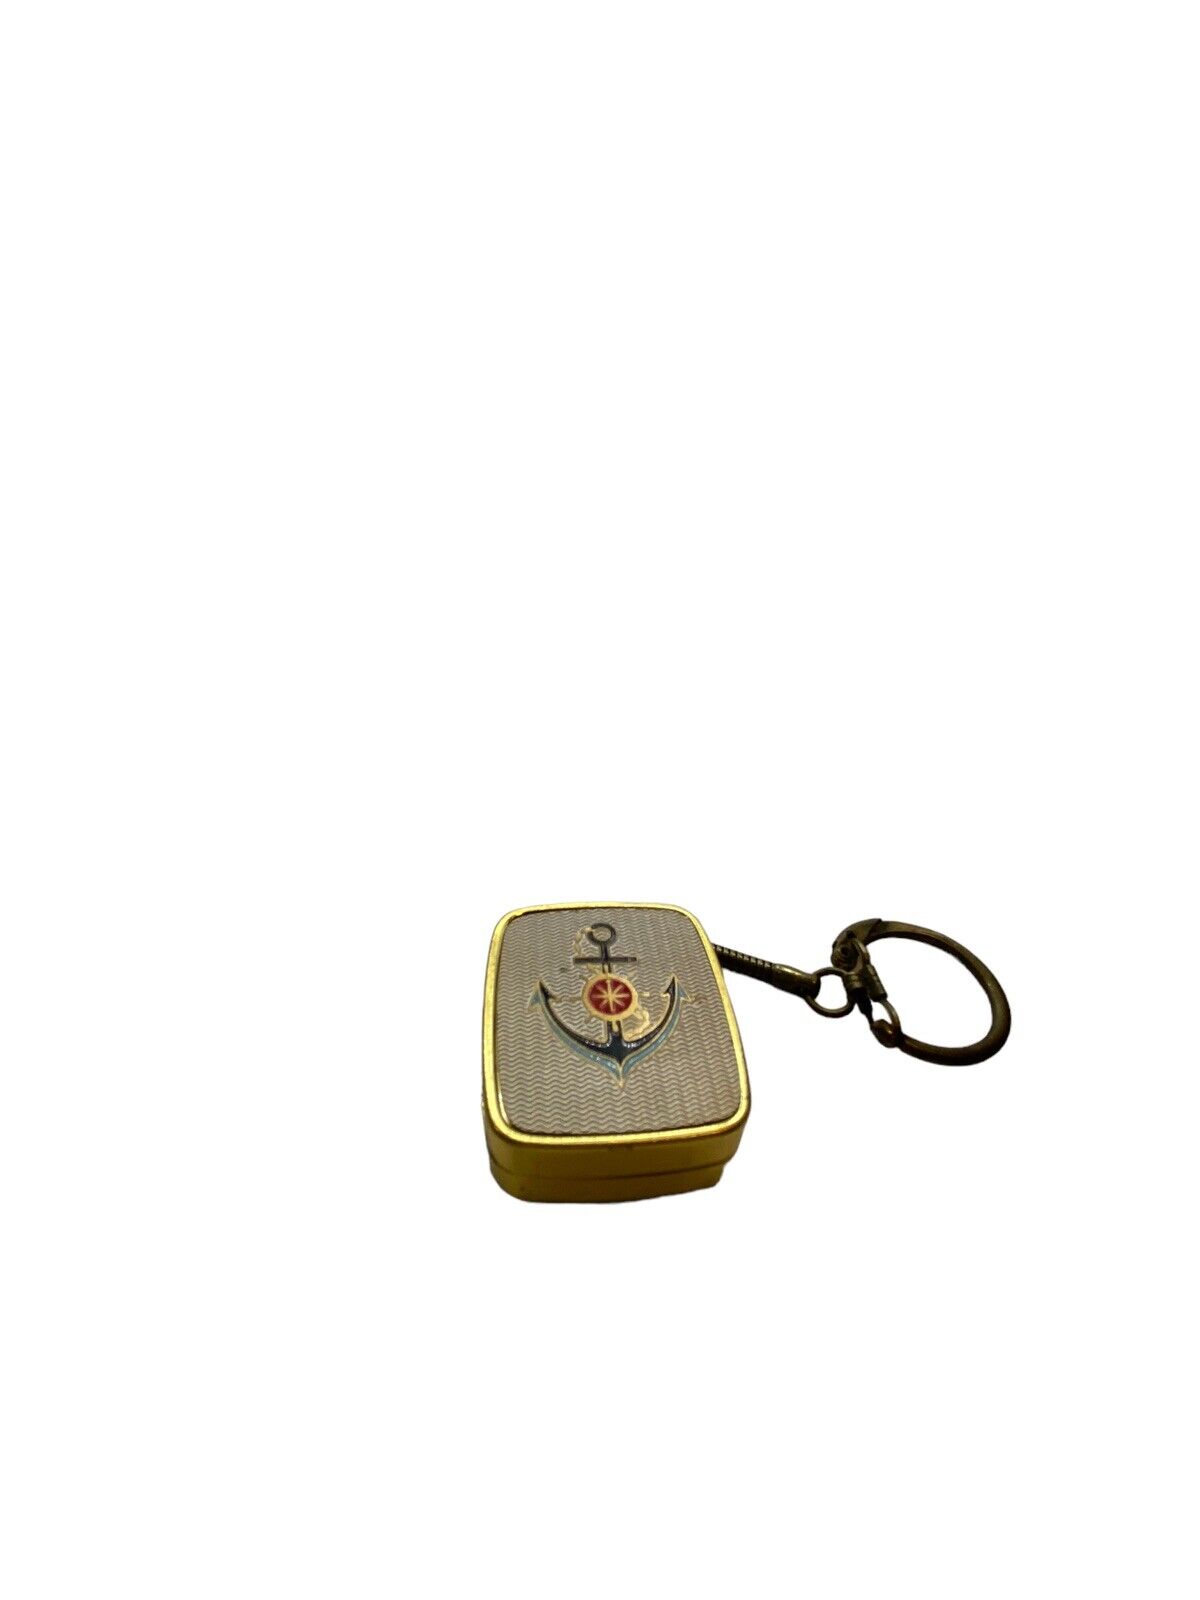 vintage Clover music box keychain anchor Nautical Works